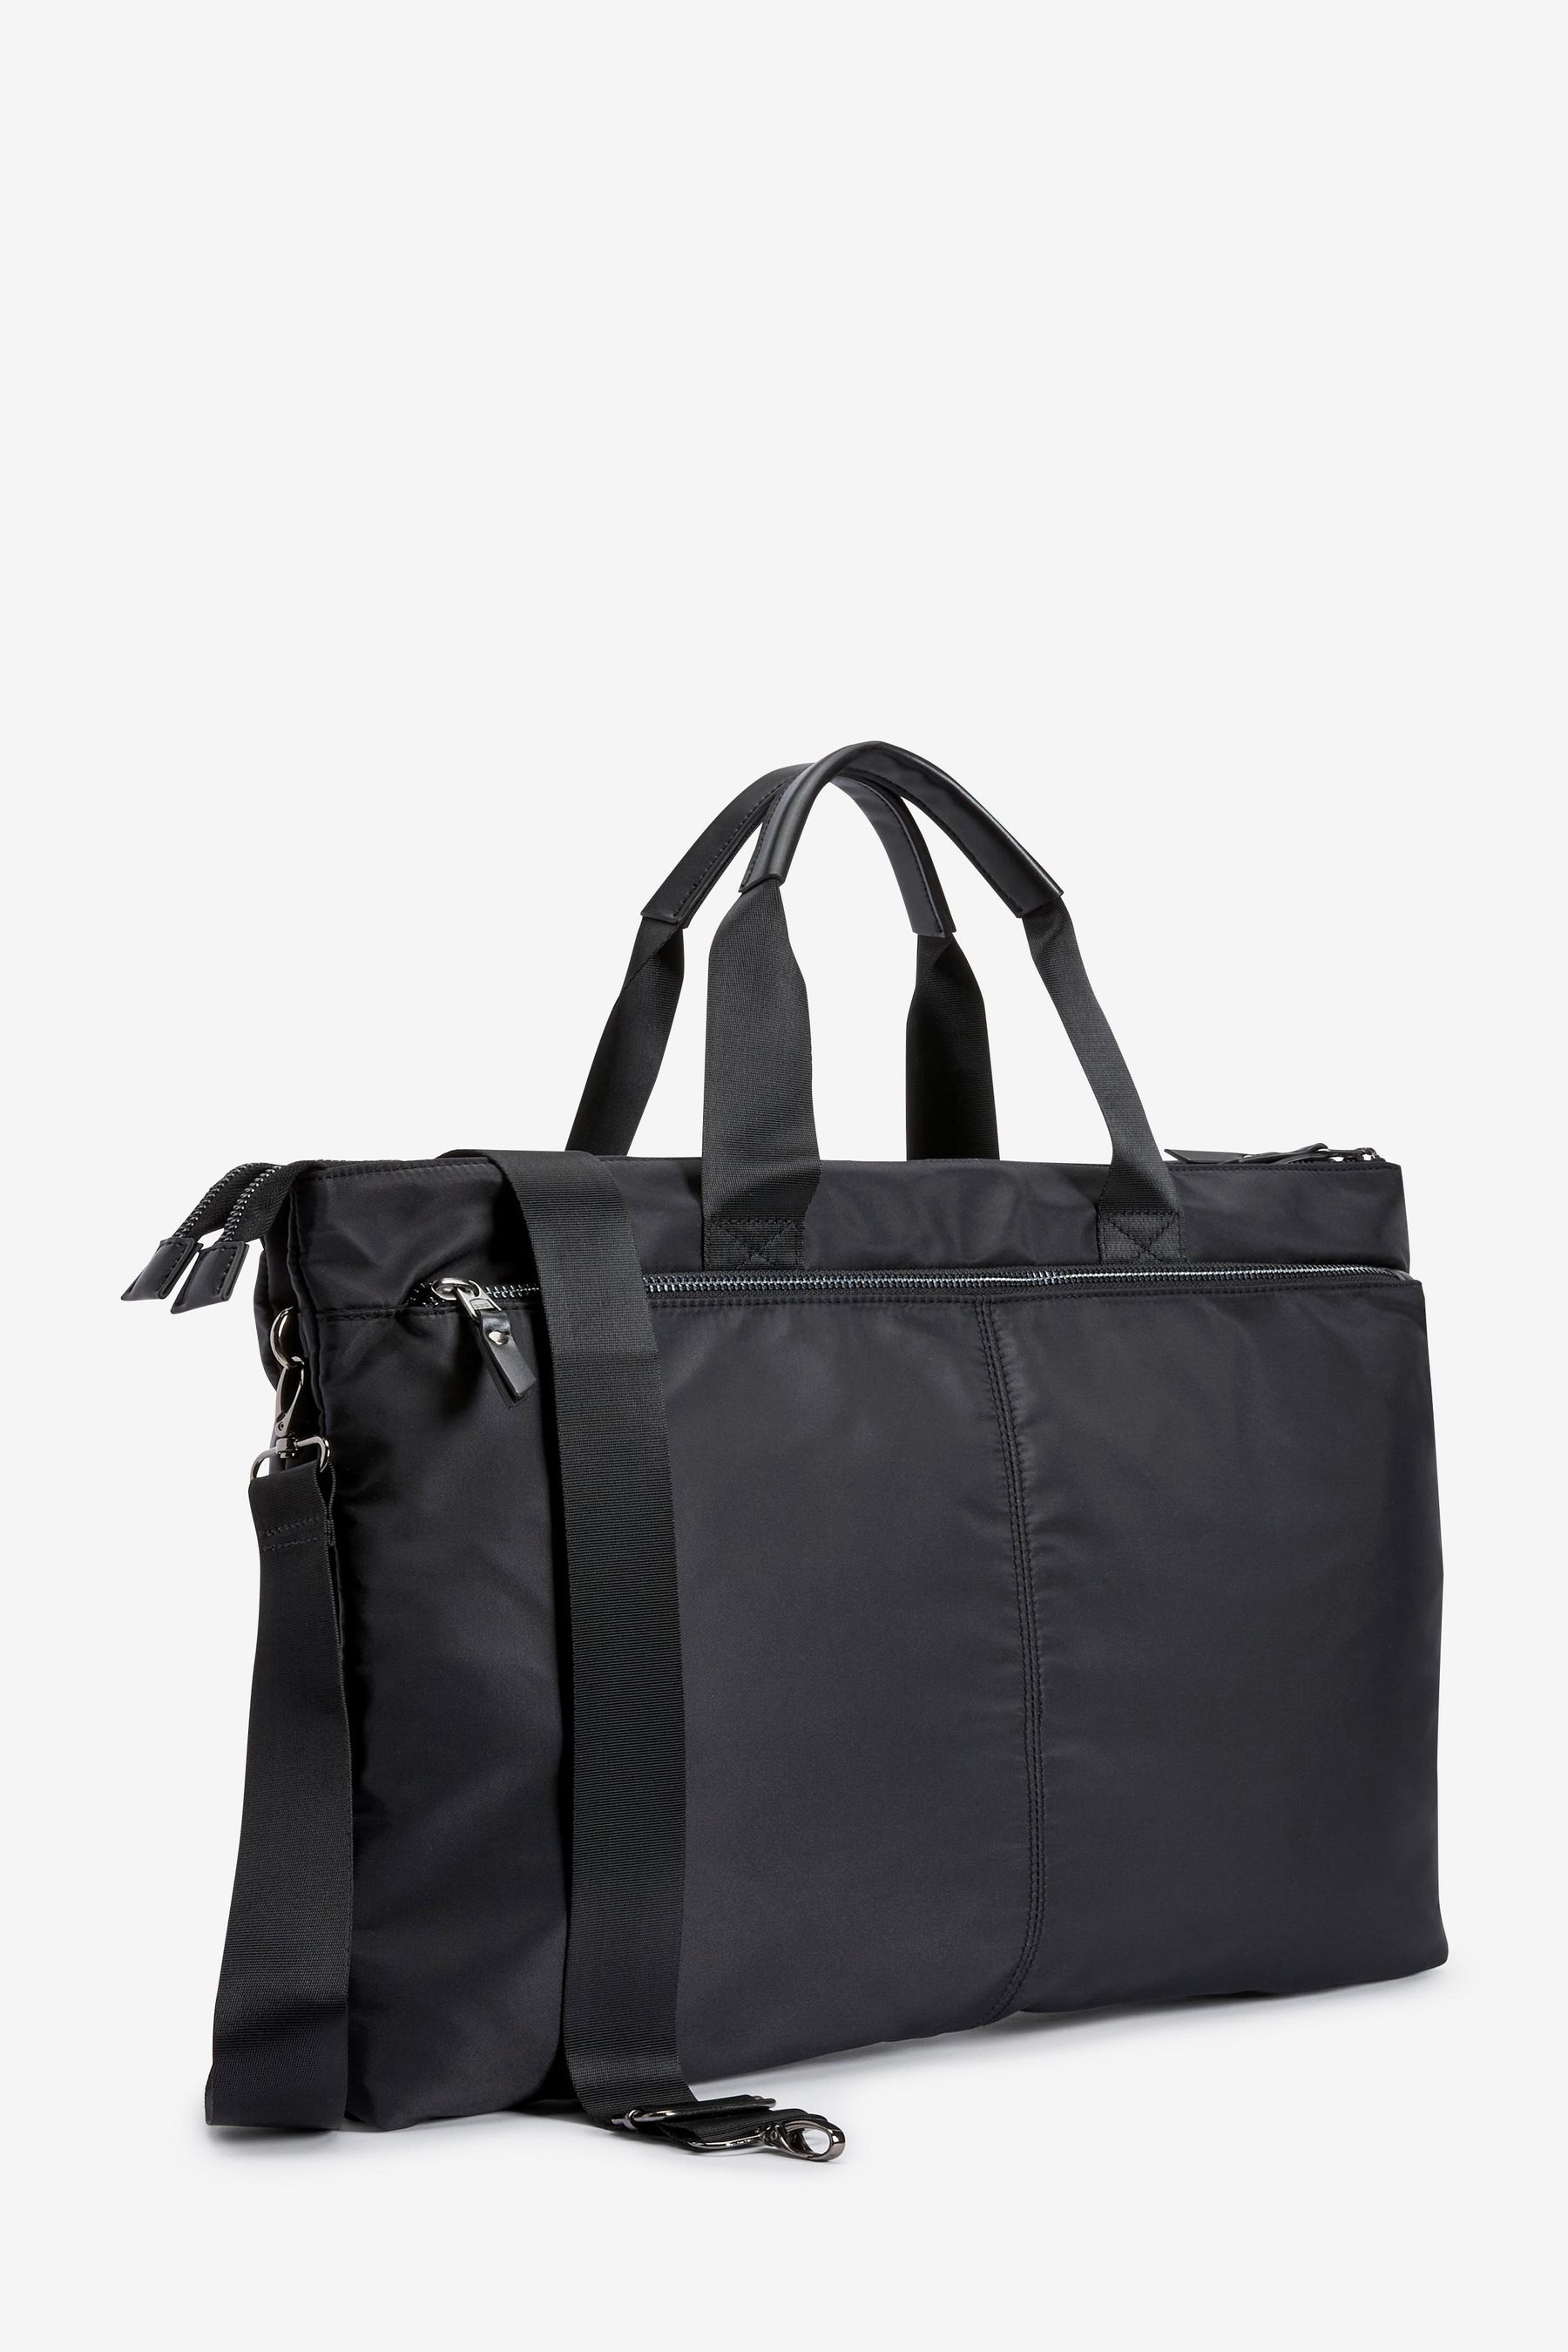 Buy Black Laptop Tote Handbag from the Next UK online shop